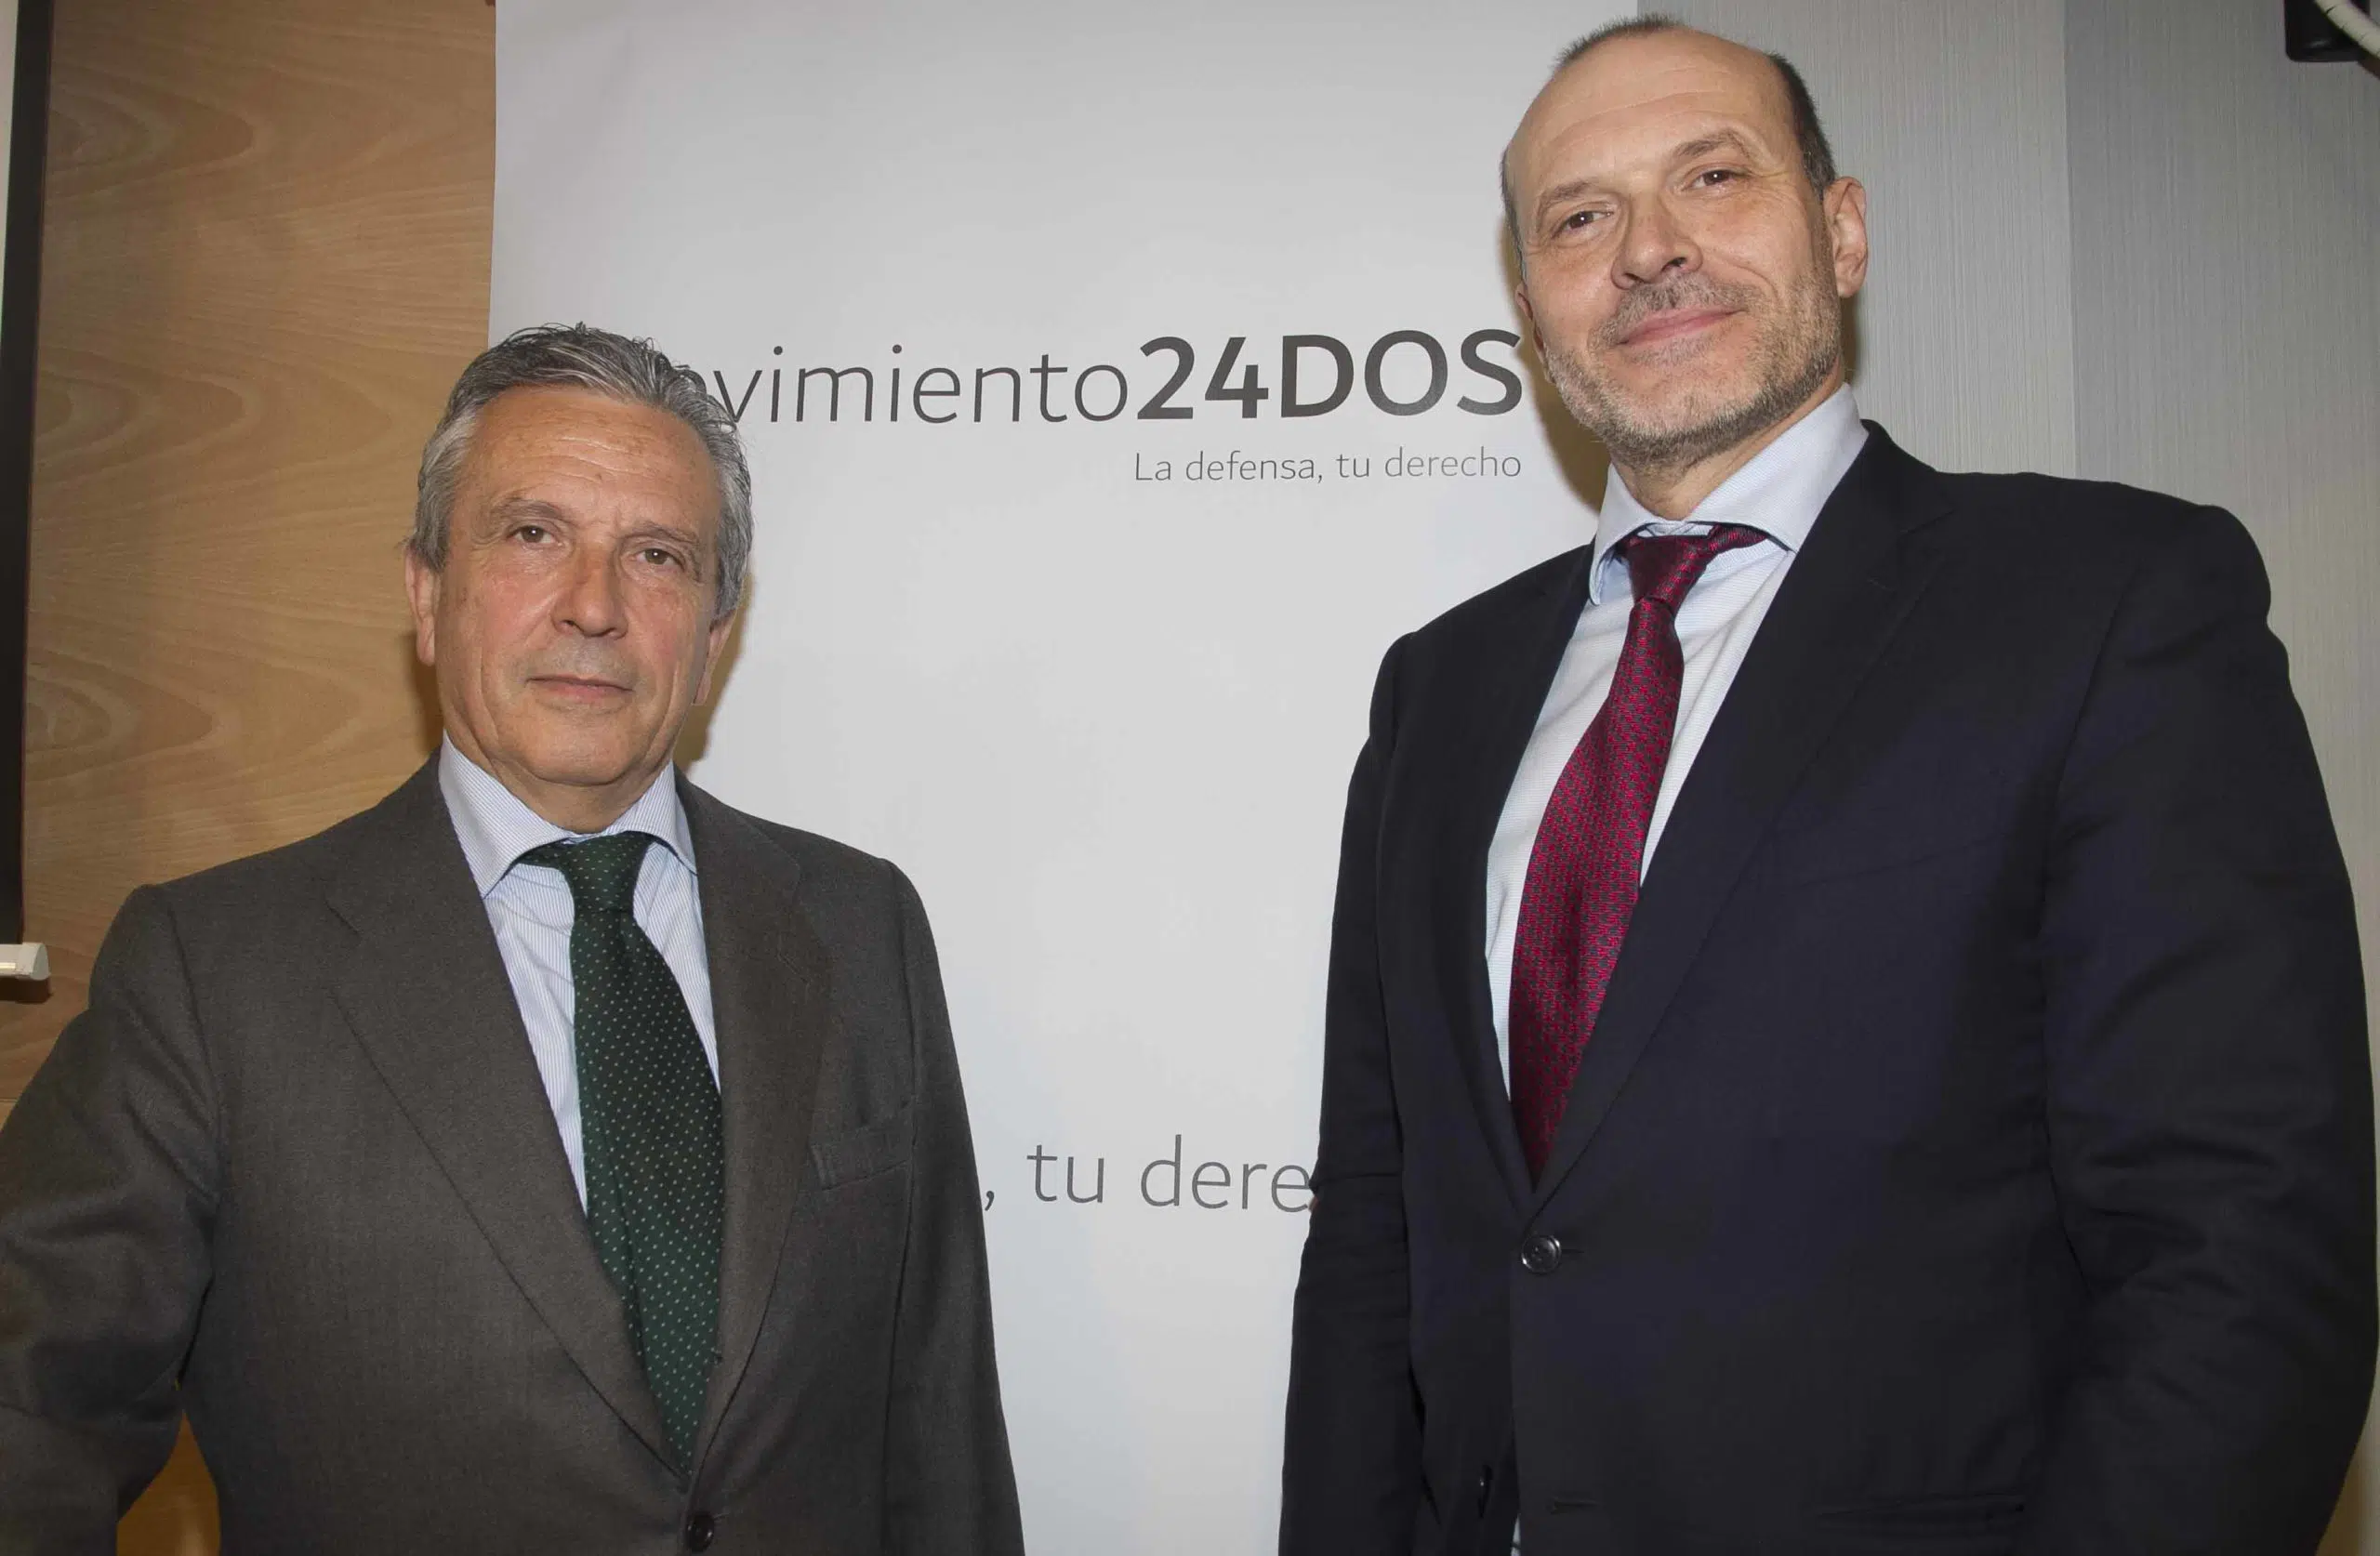 Movimiento 24.DOS advierte que se querellará contra el responsable que autorice escoltas españoles a Puigdemont